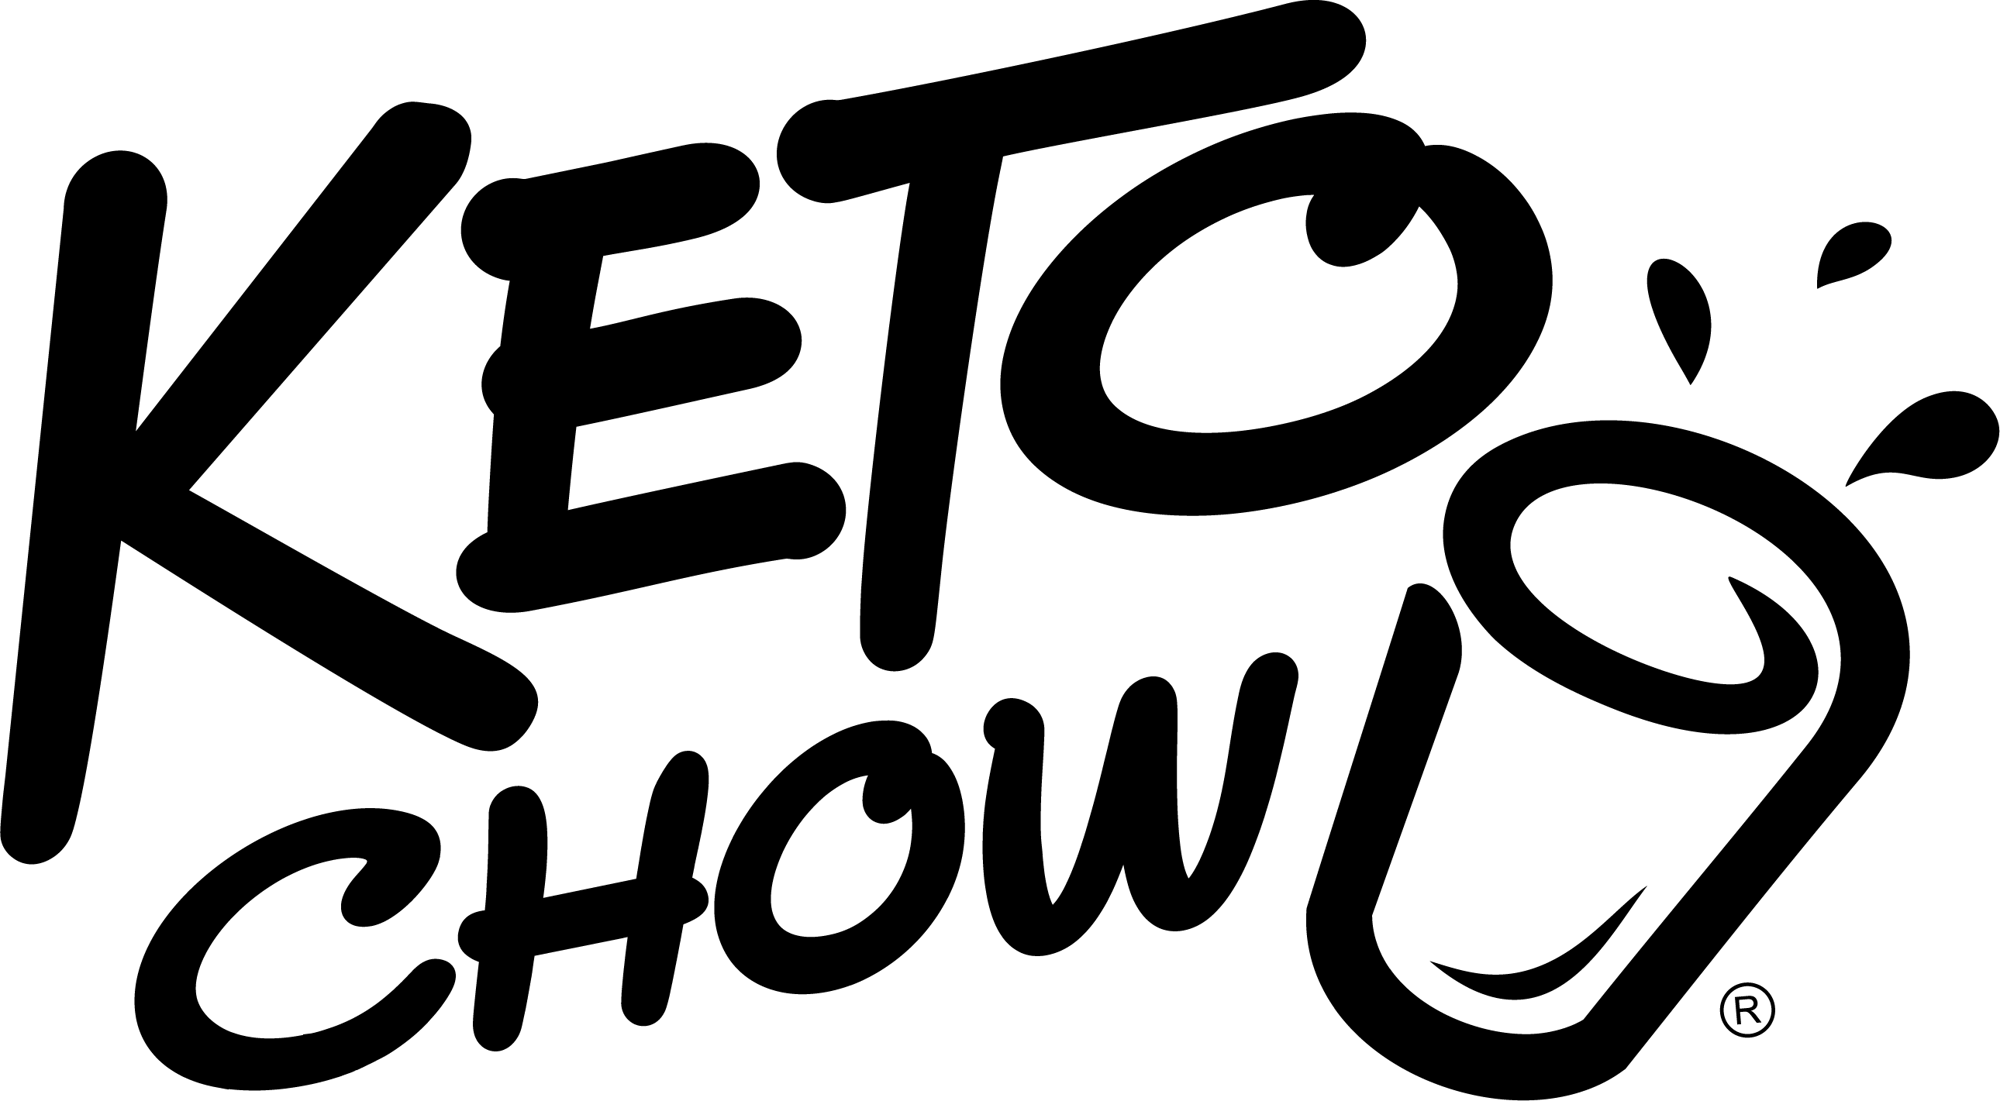 KetoChow Logo Black